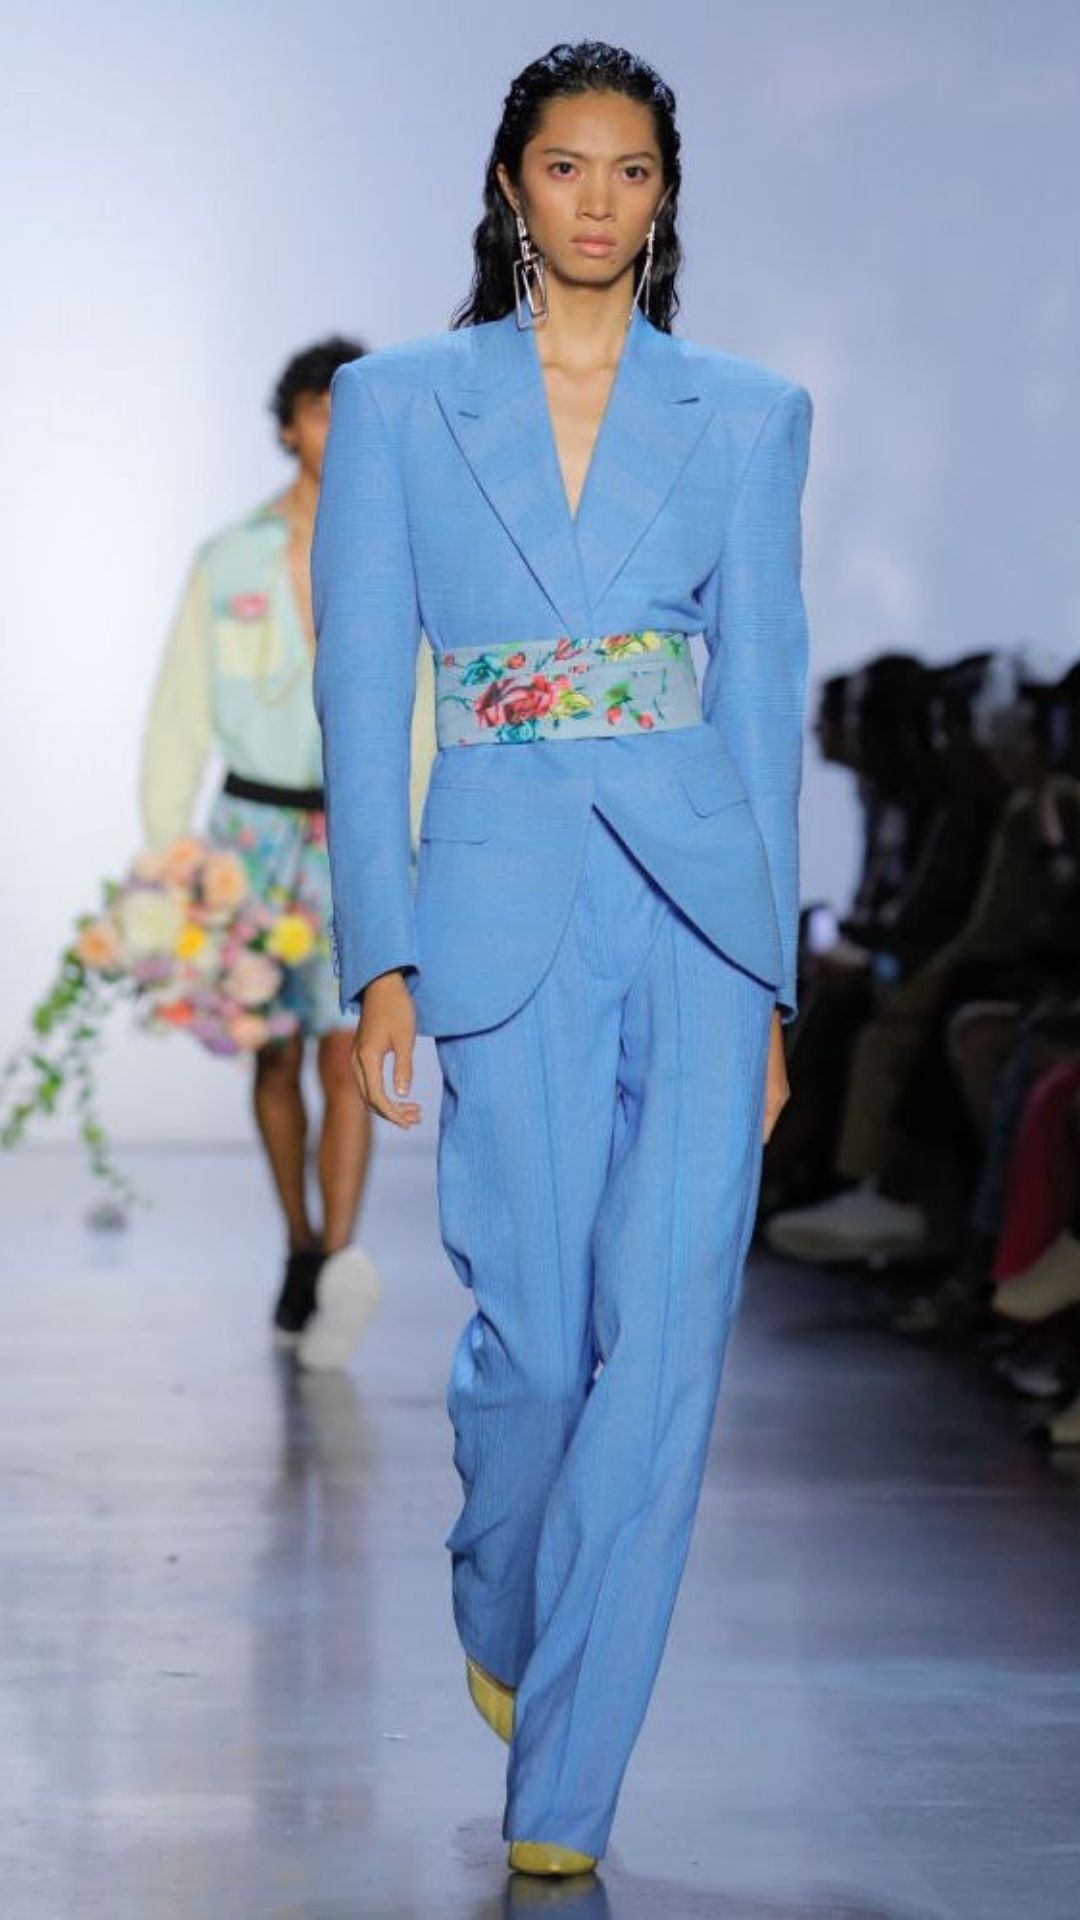 Bright Blue Is Trending At New York Fashion Week | Harper's Bazaar Arabia